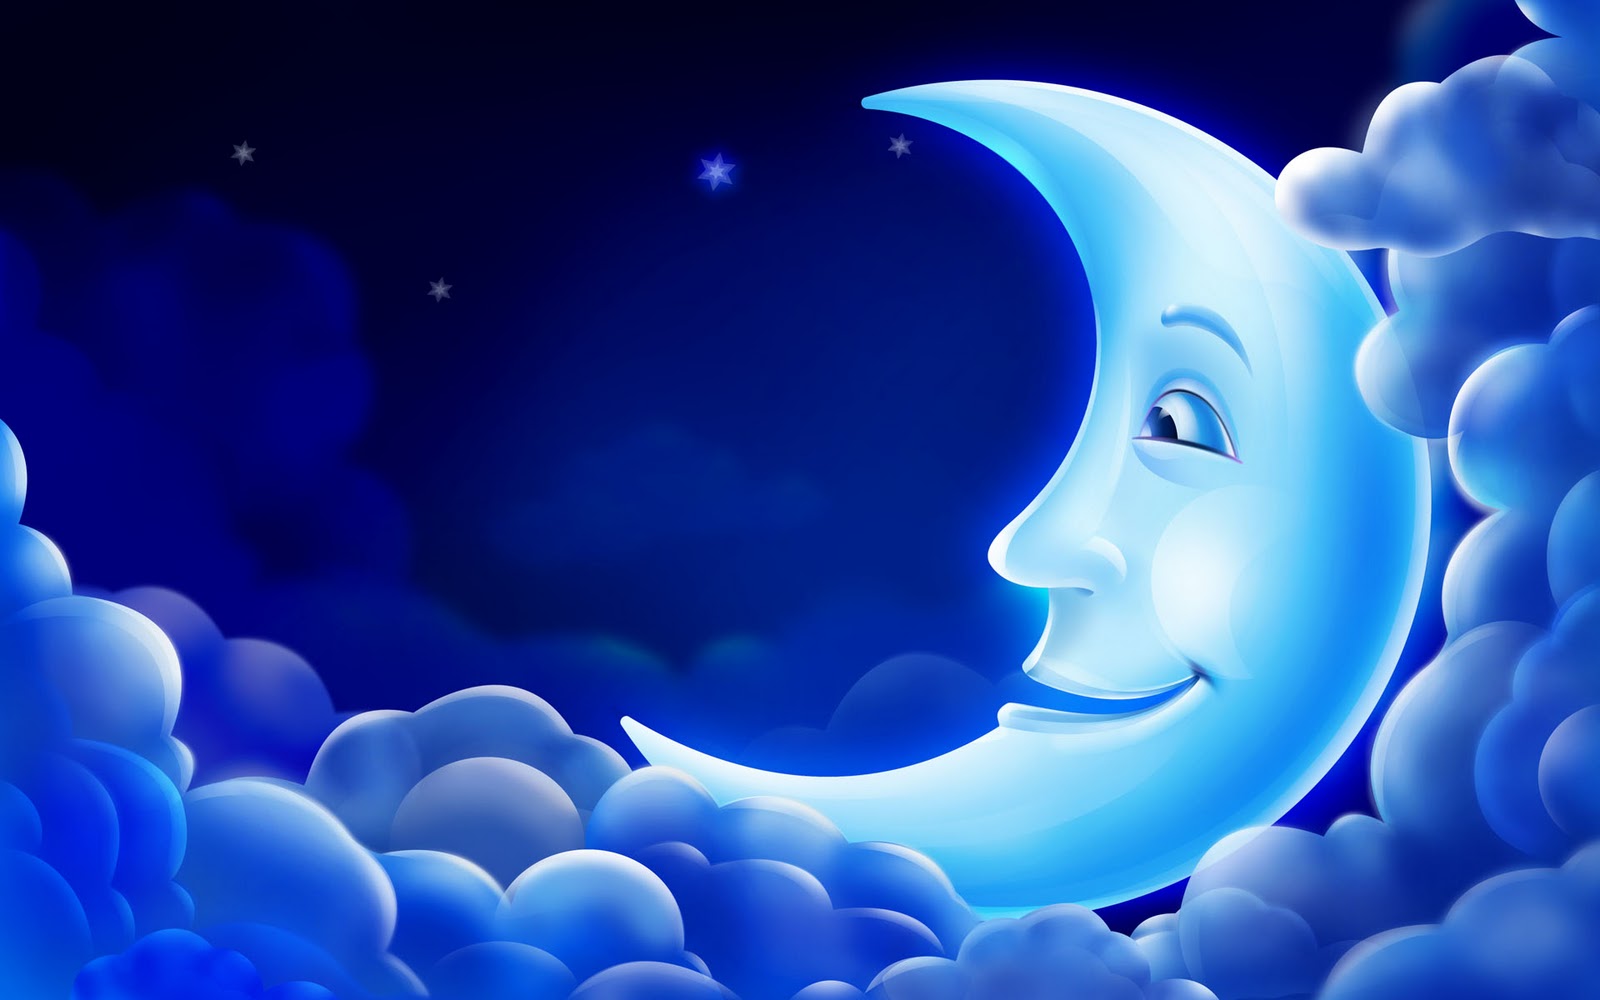 Cg 3d Animation Pc Background Blue Moon Smile Sky Star Wallpaper Jpg